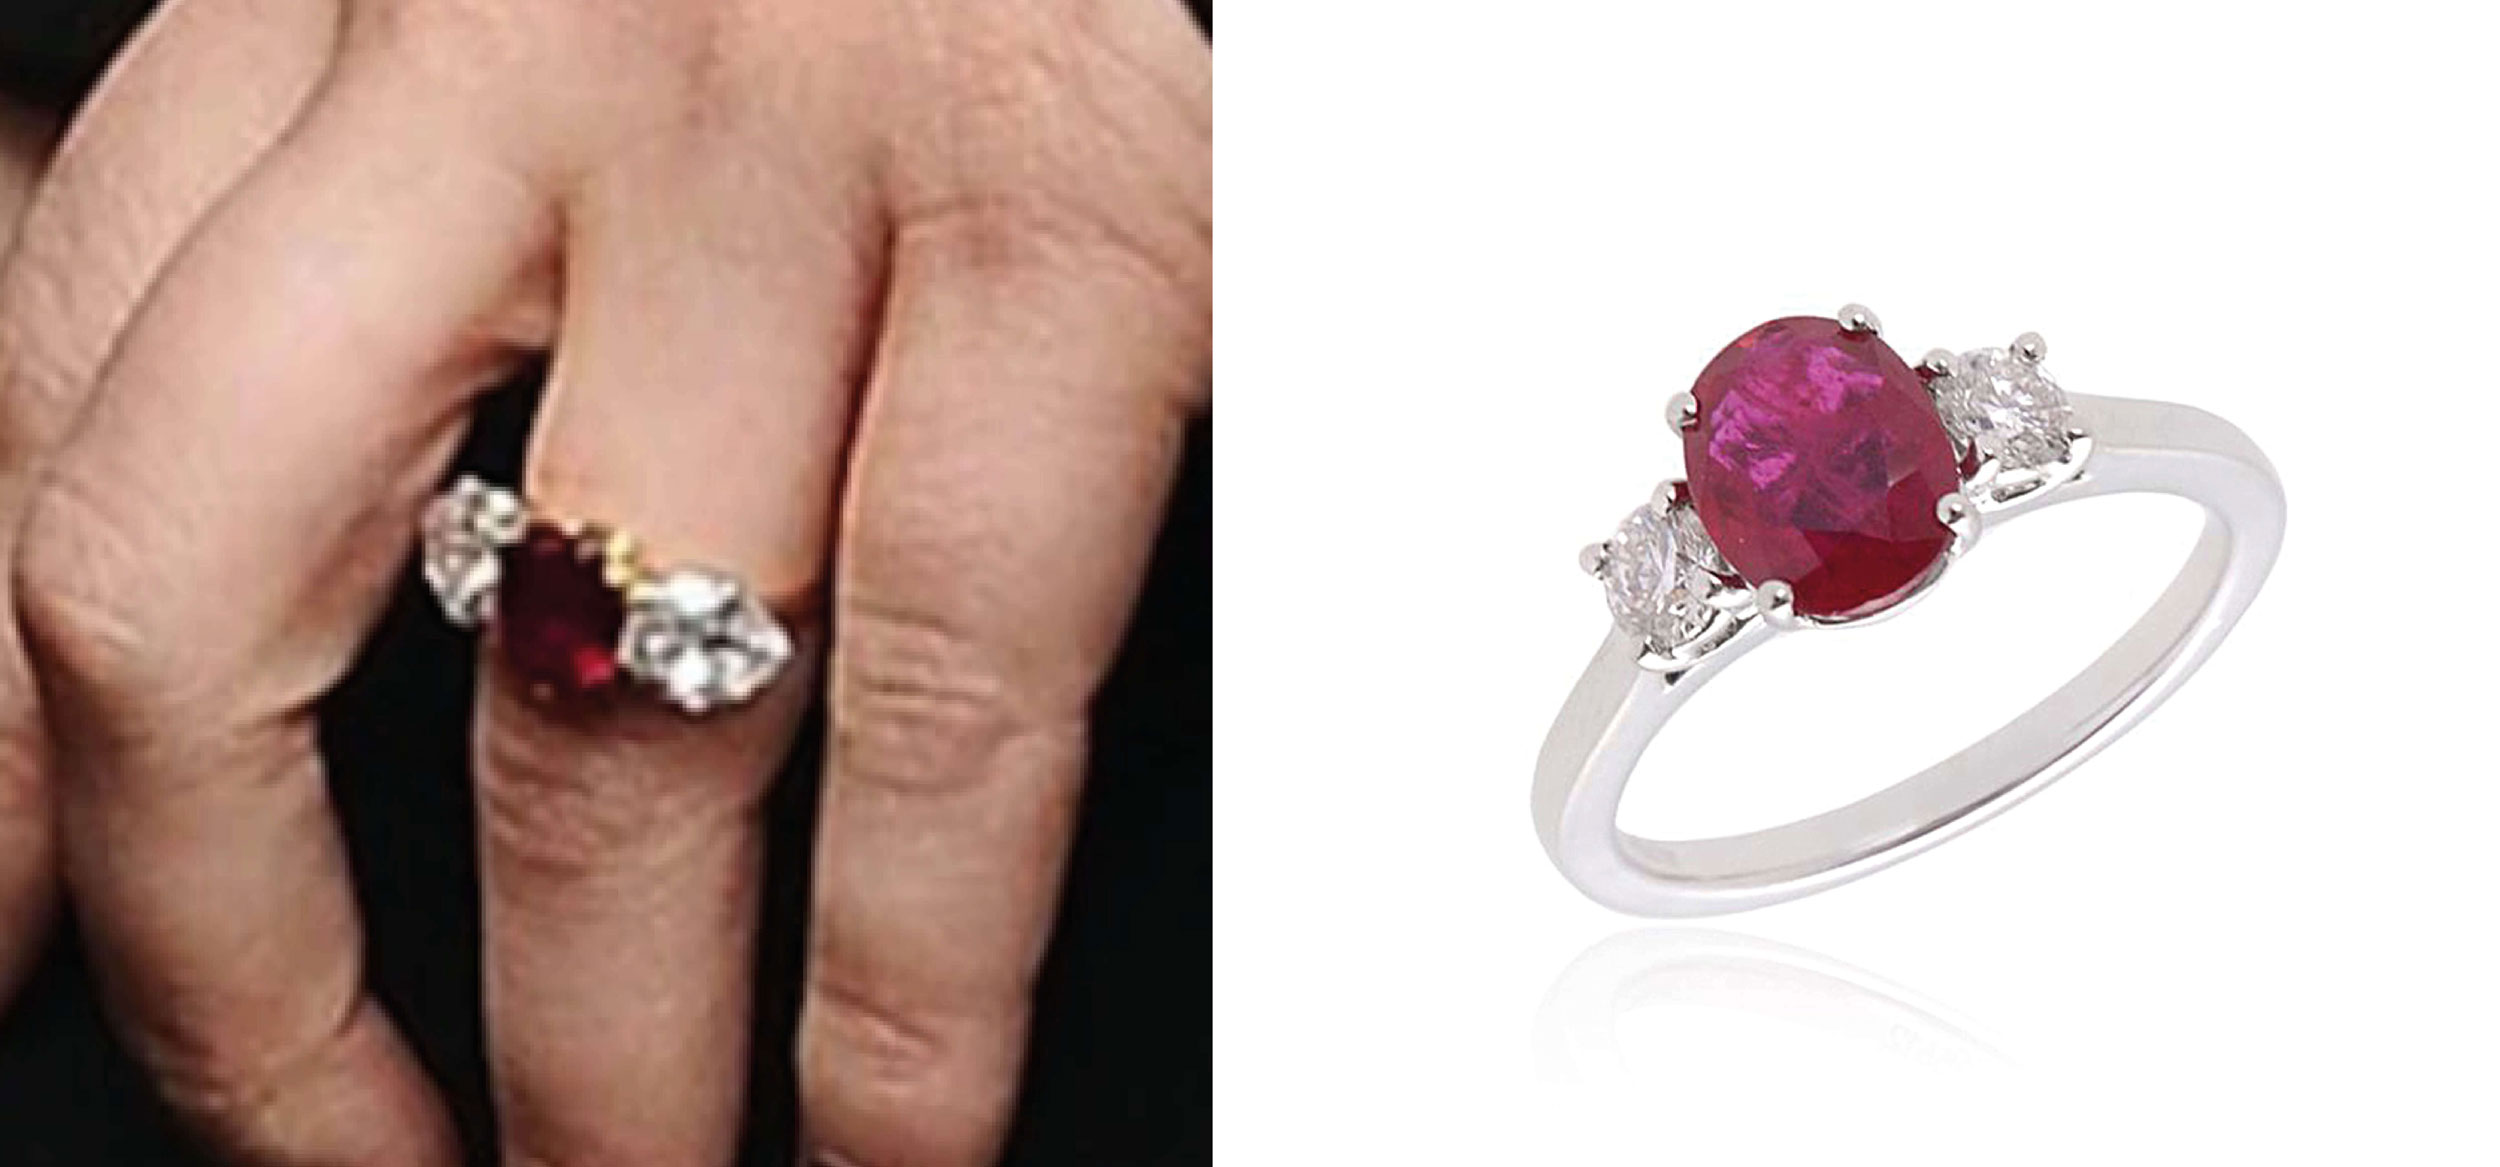 Jessica Simpson engagement ring